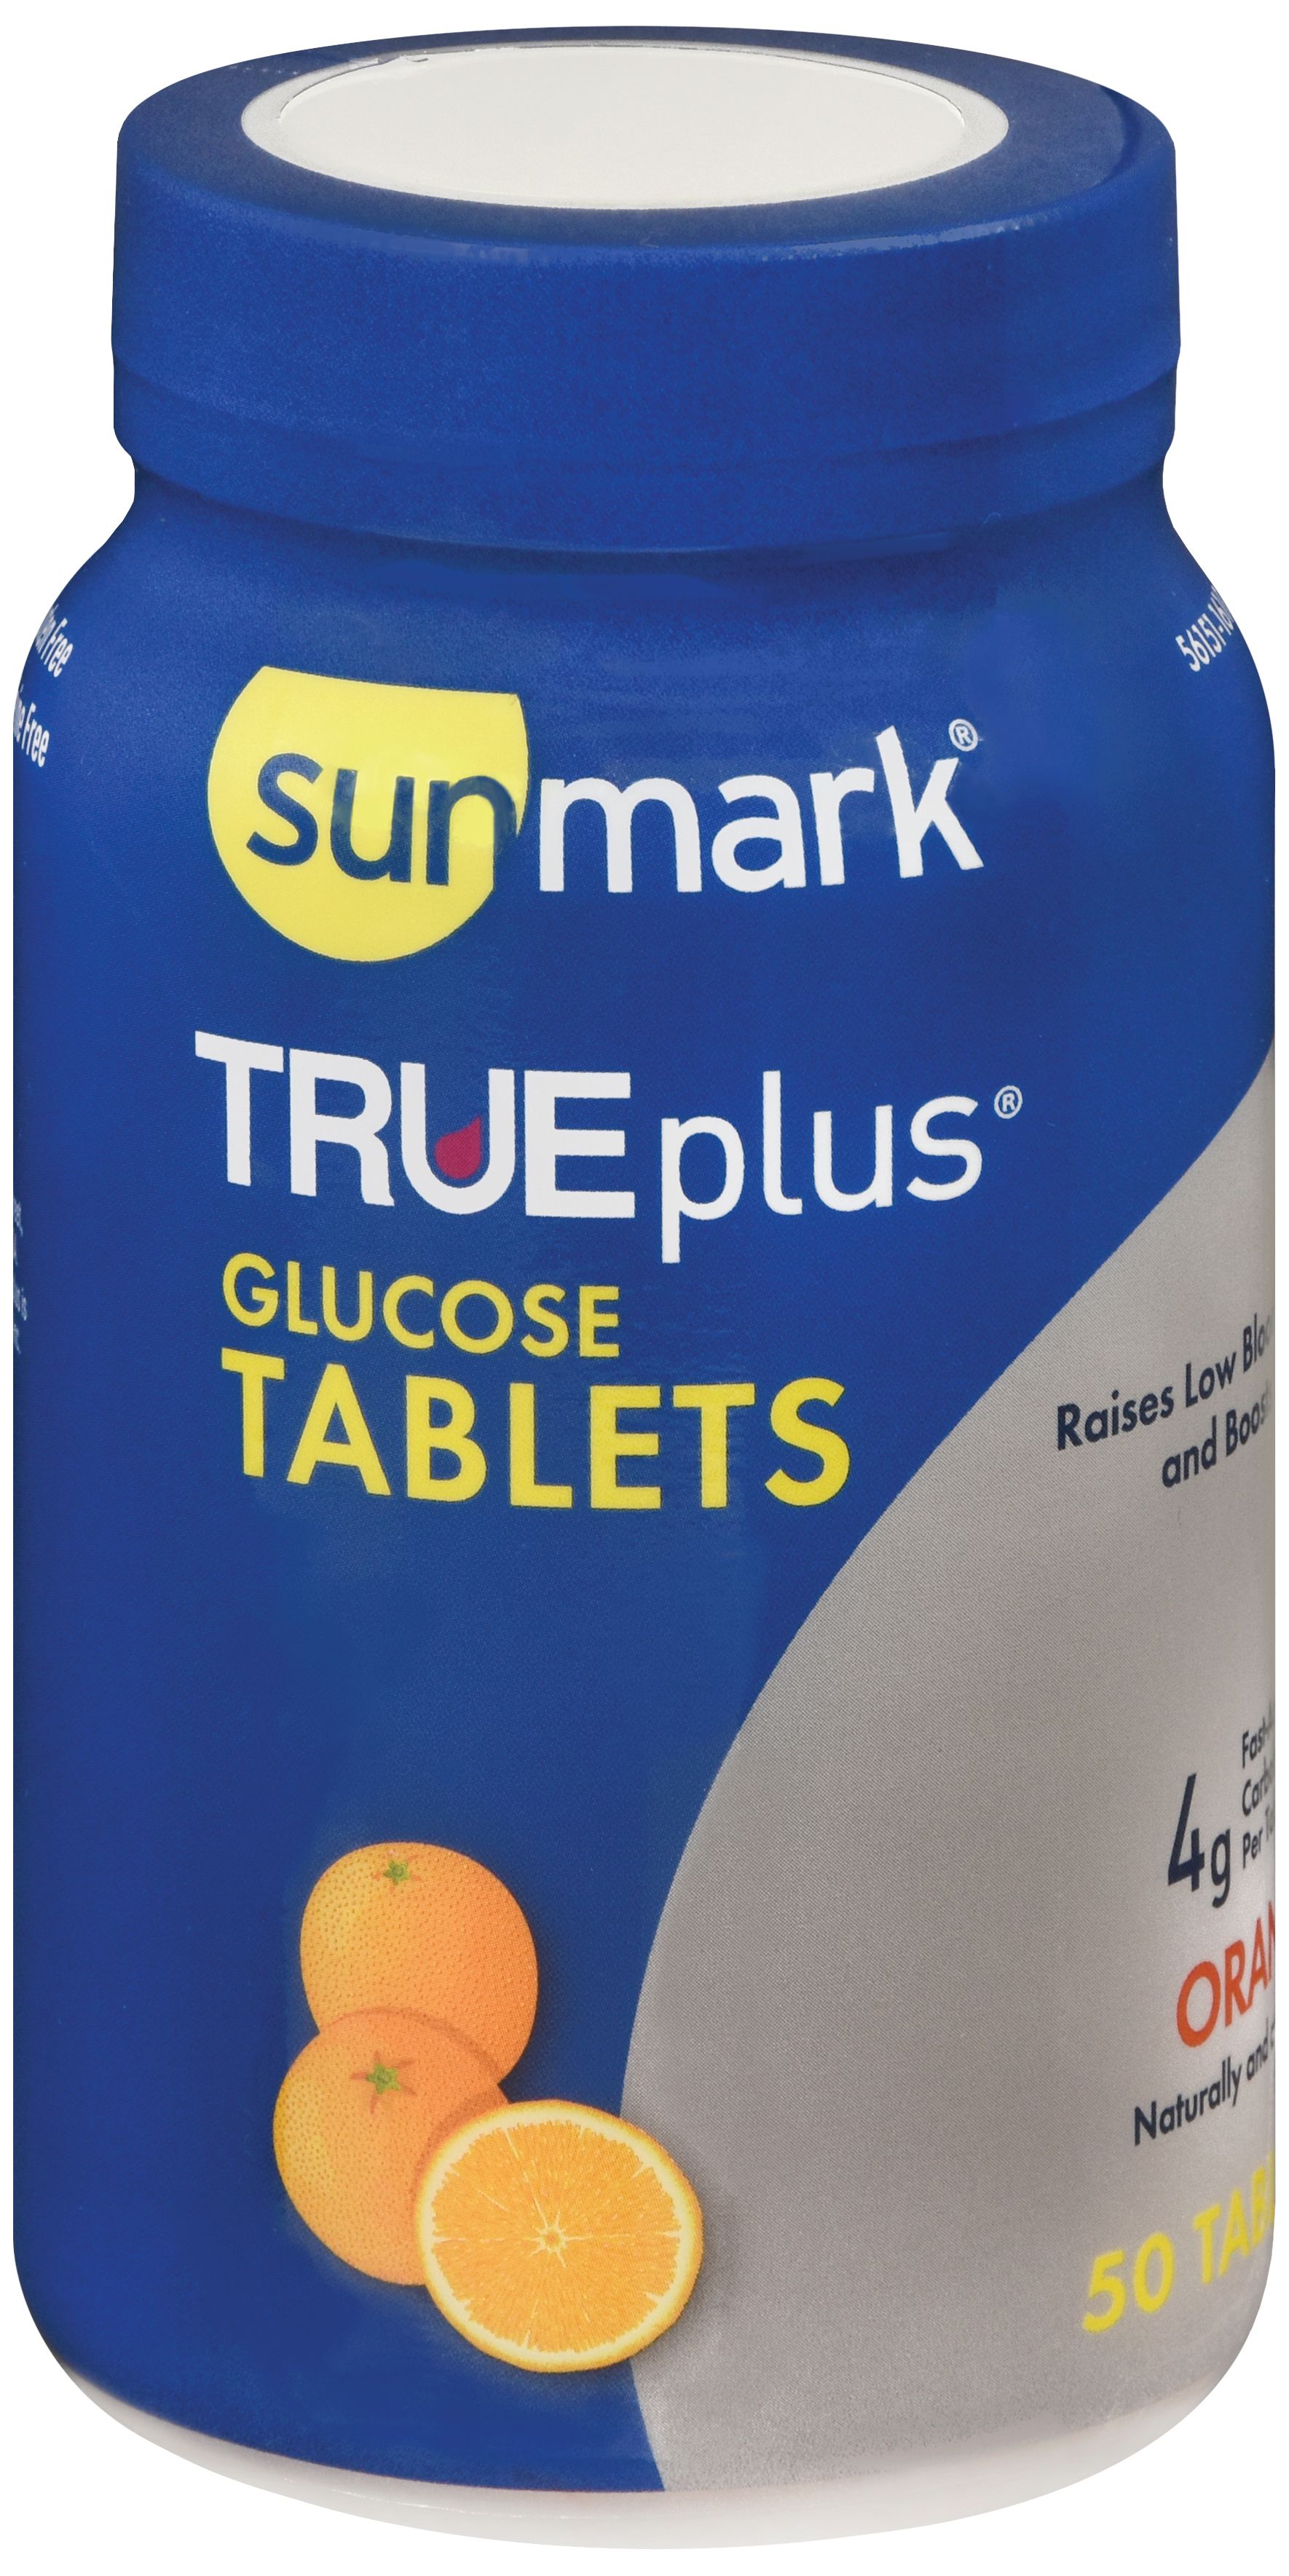 Sunmark TRUEplus Glucose Tablets, Orange - 50 ct